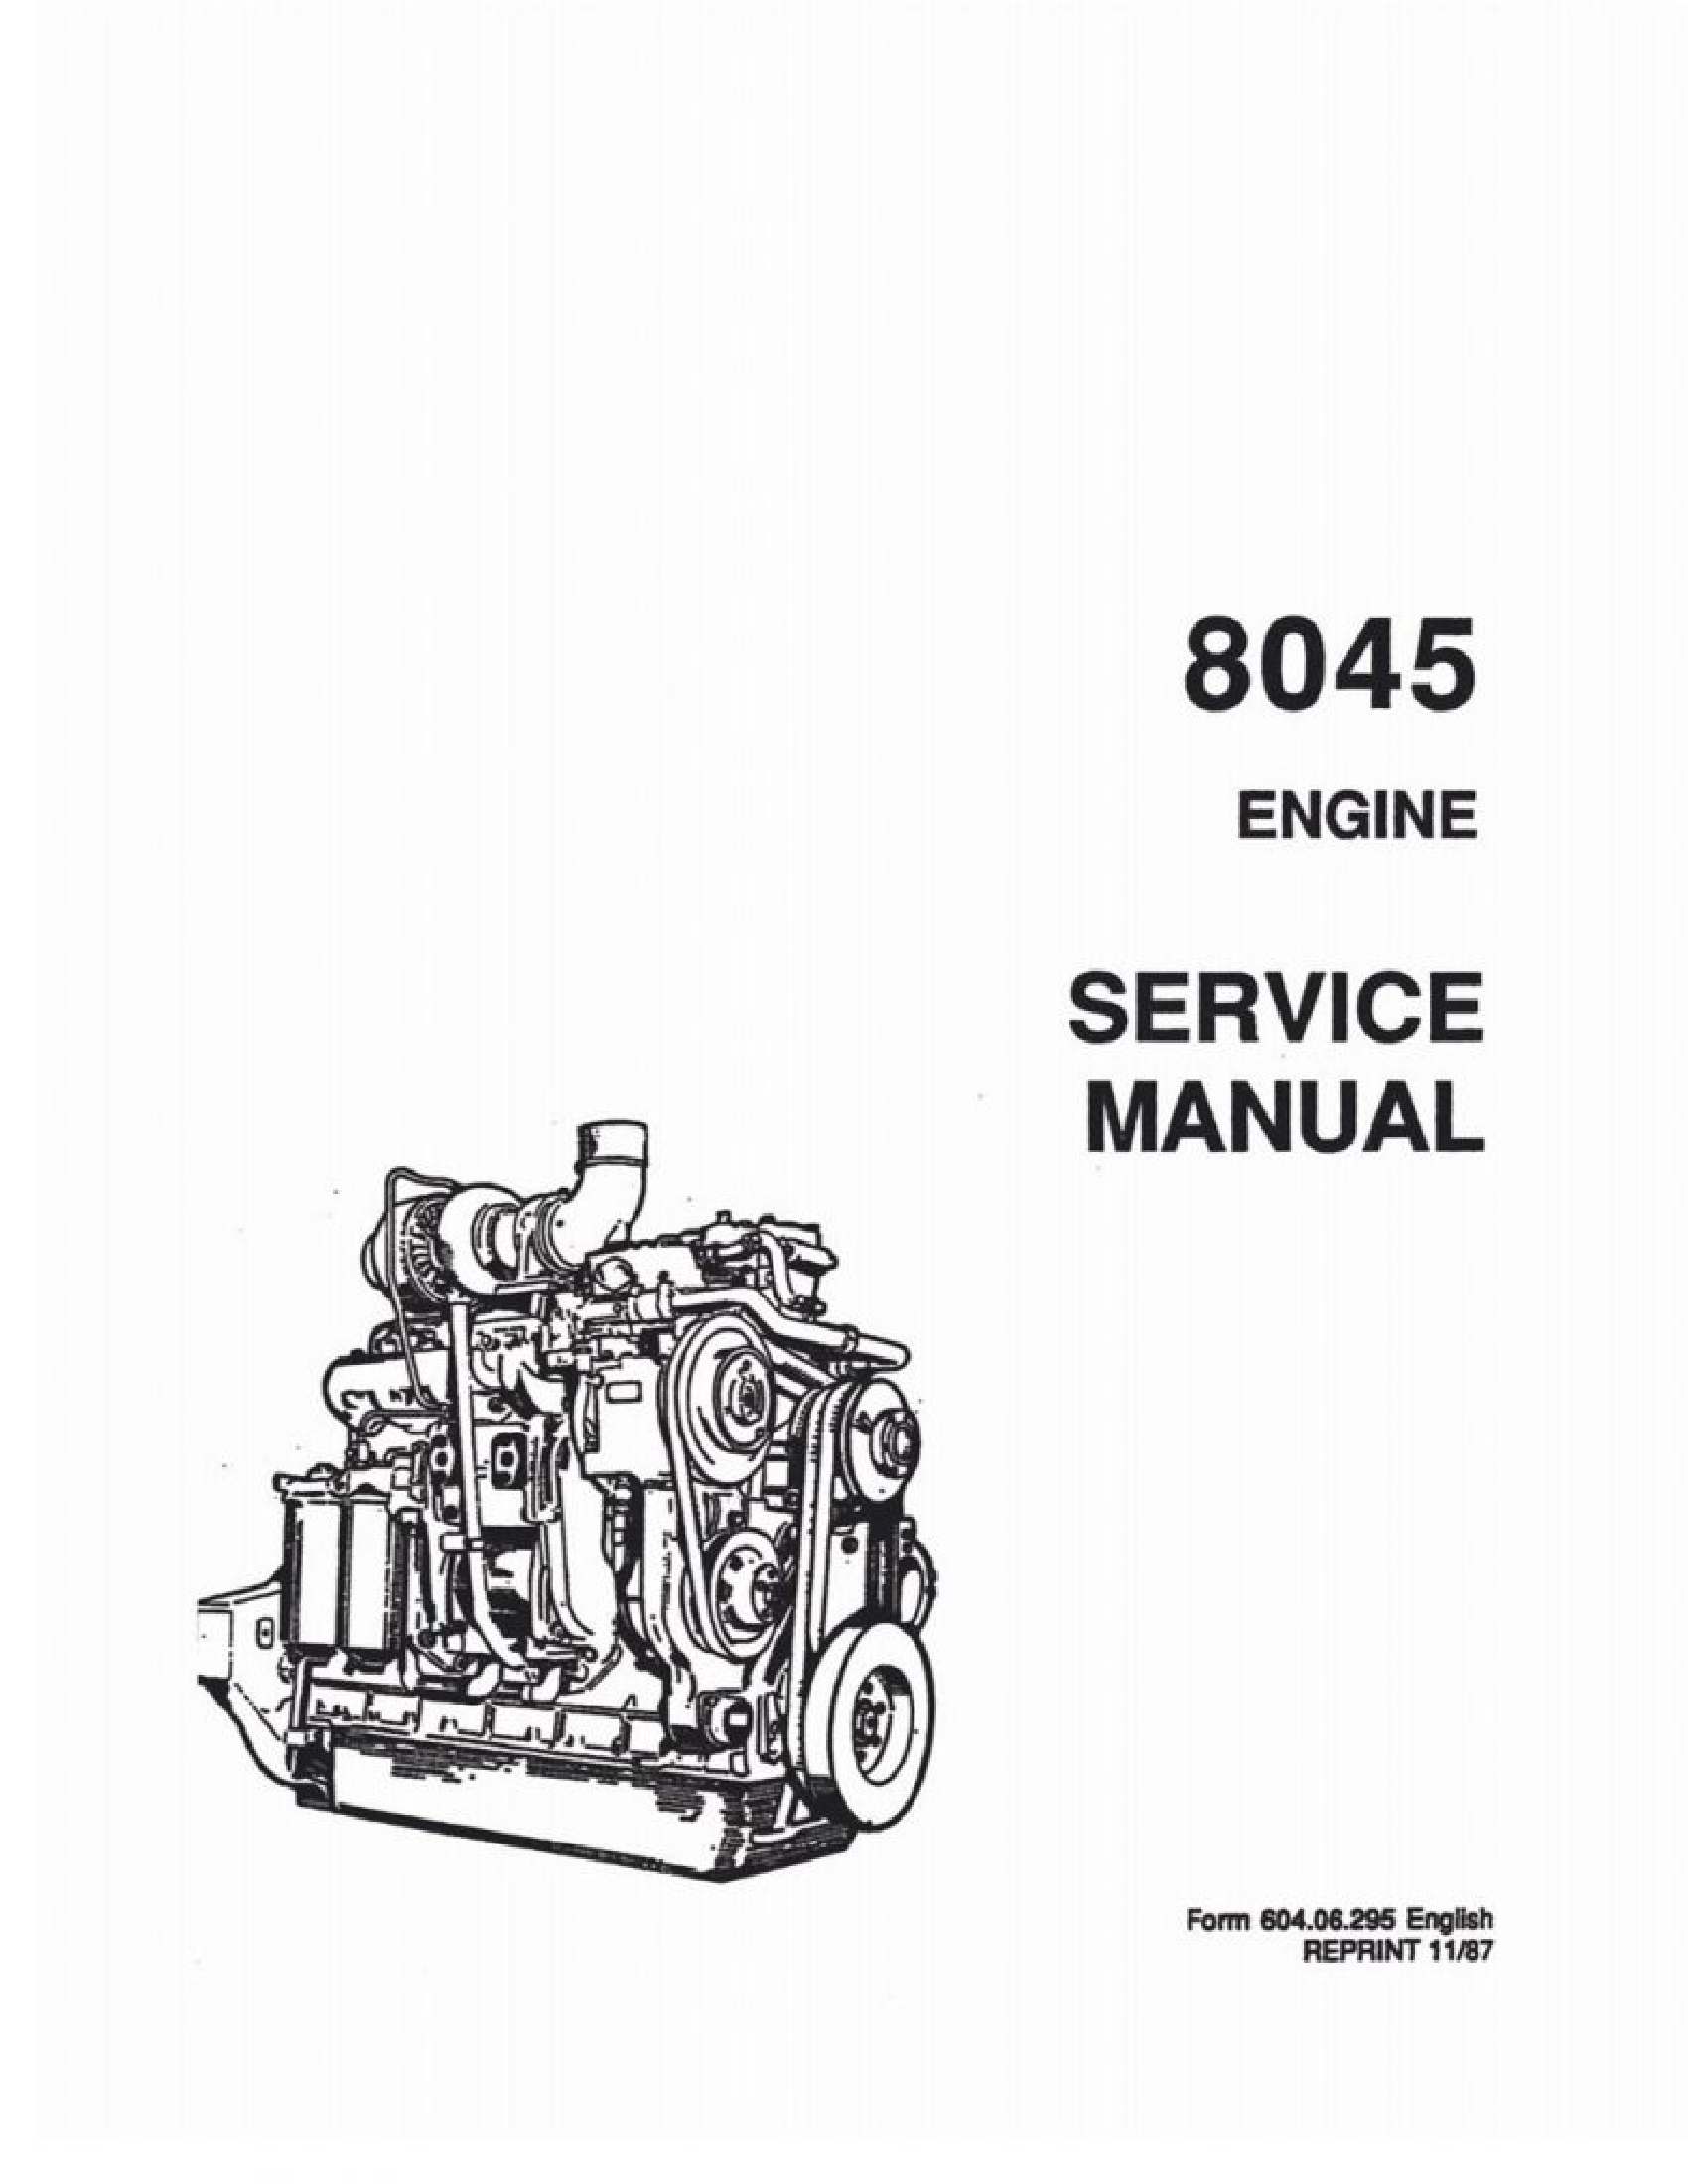 Fiat-Allis 8045 Engine manual